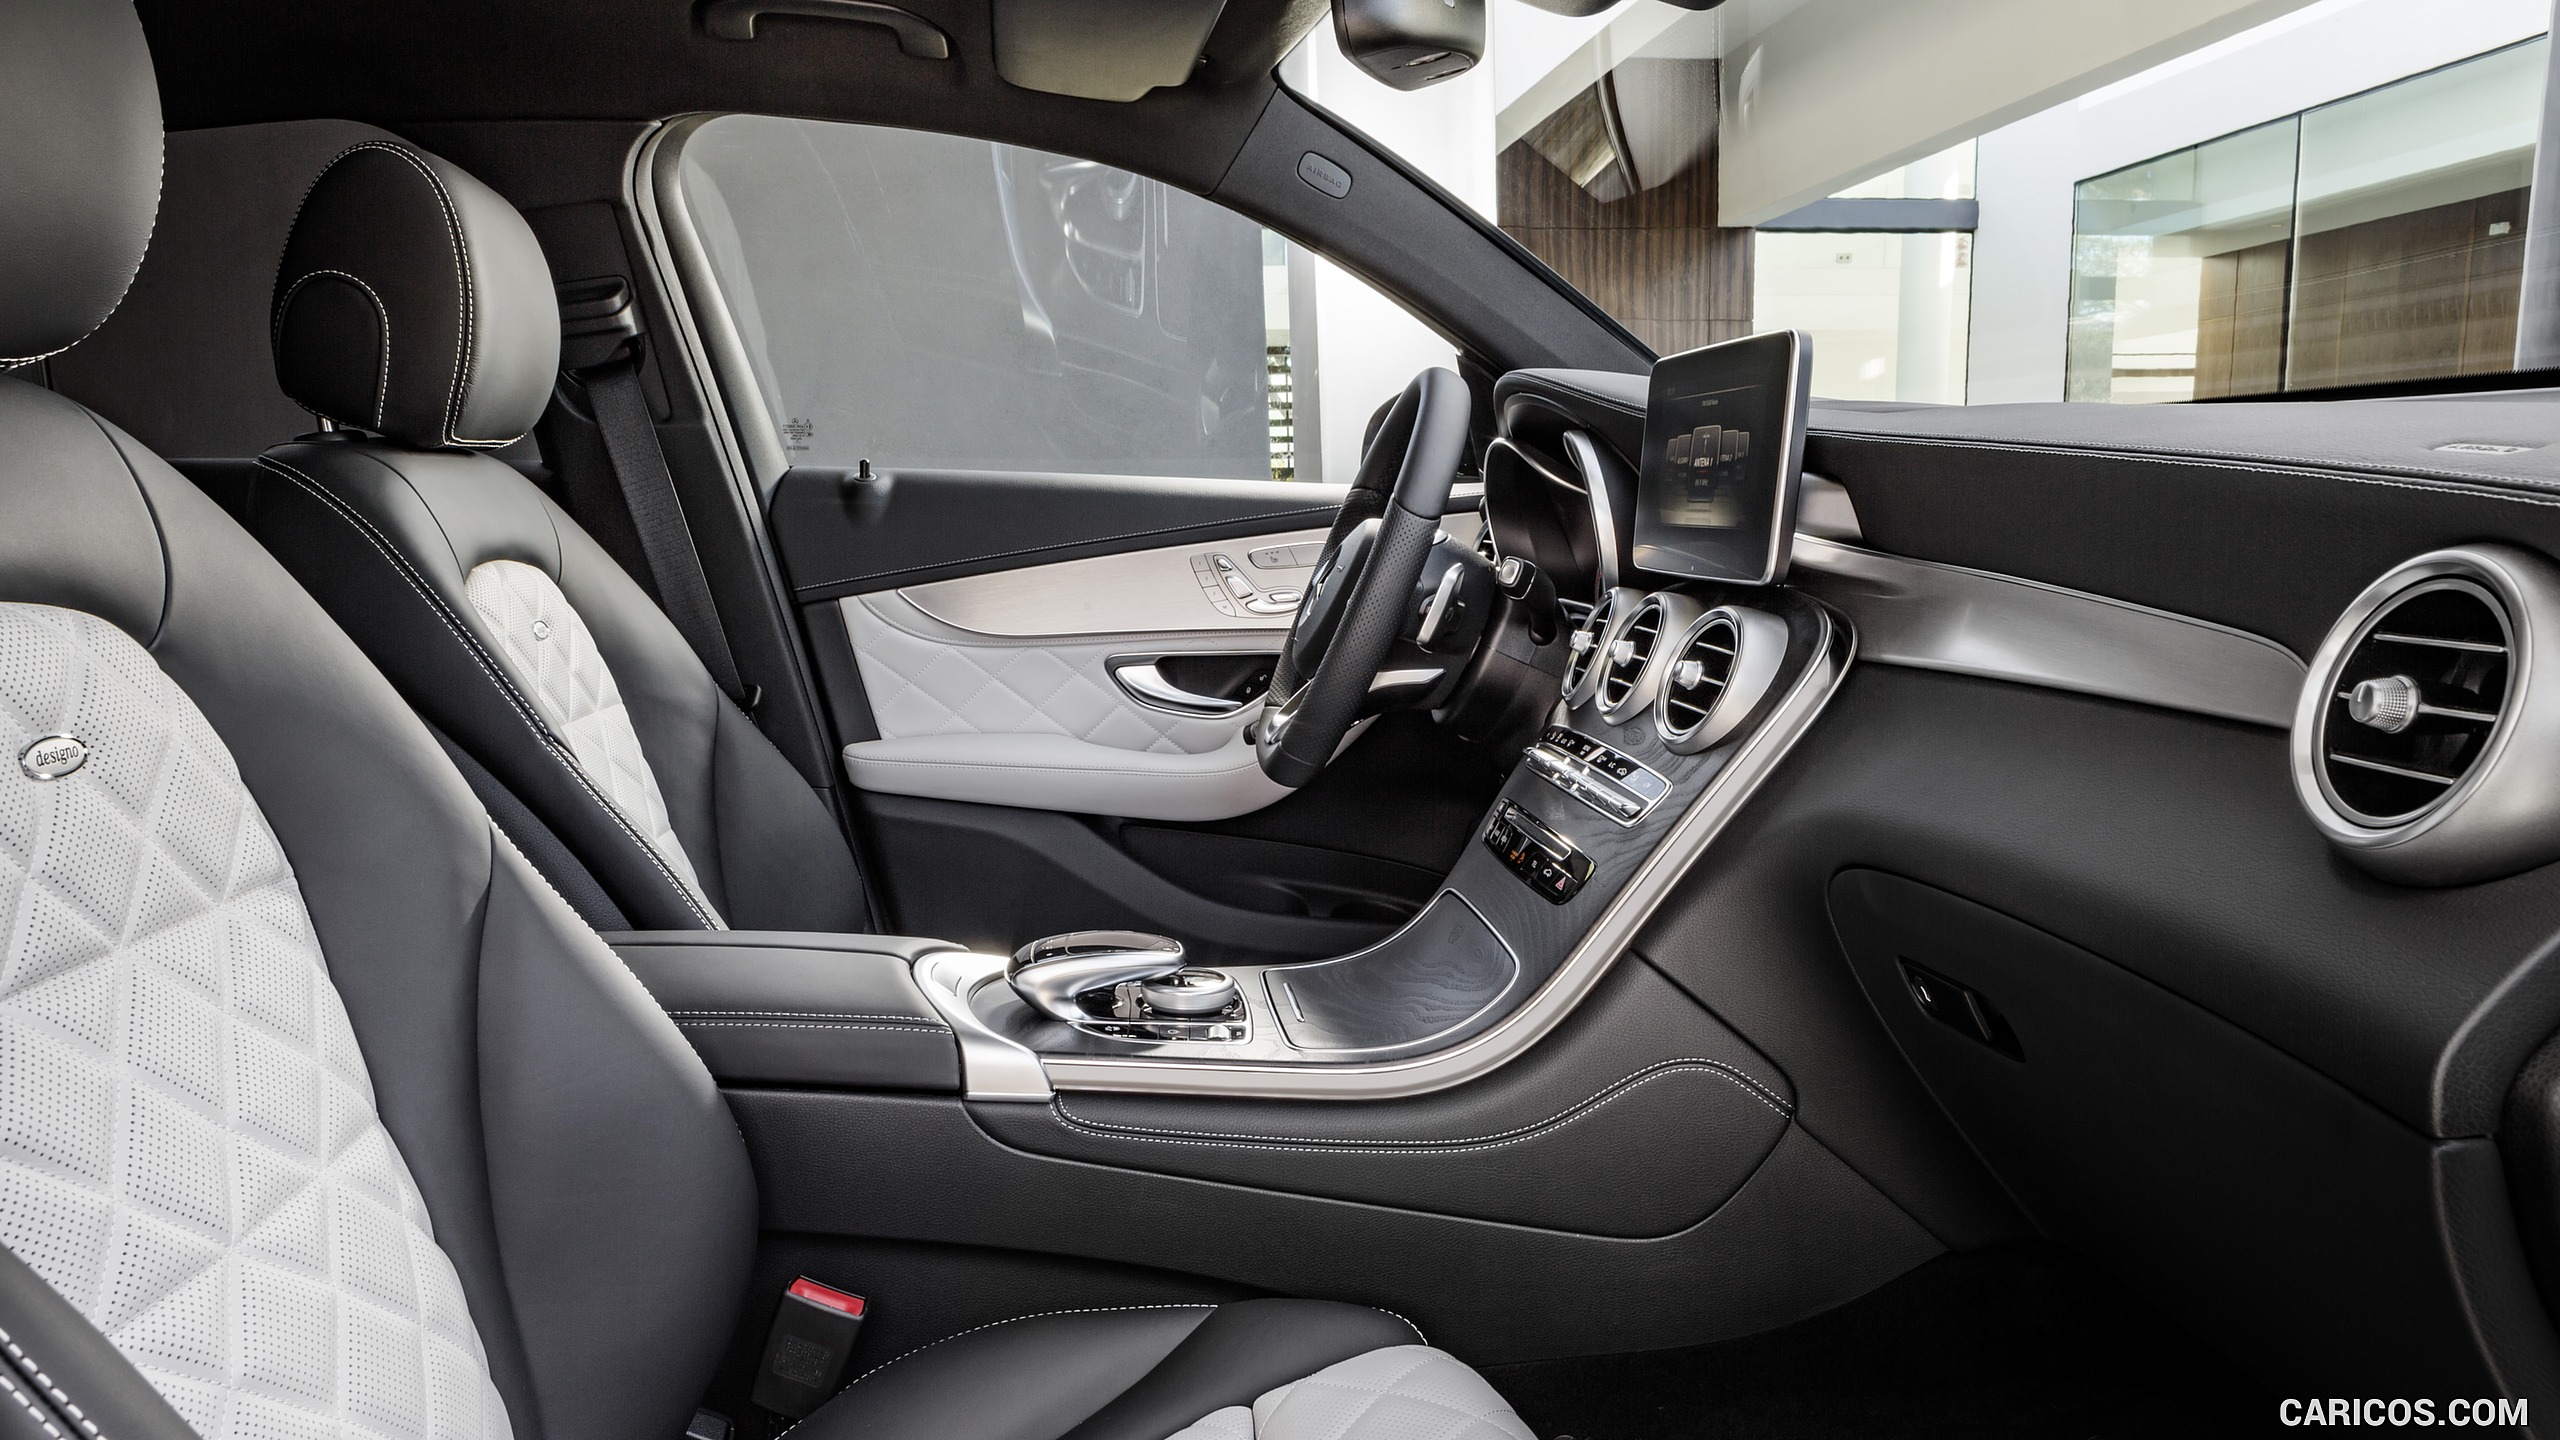 2017 Mercedes-Benz GLC Coupe - Designo Platinum White/Black Interior, Front Seats, #28 of 144